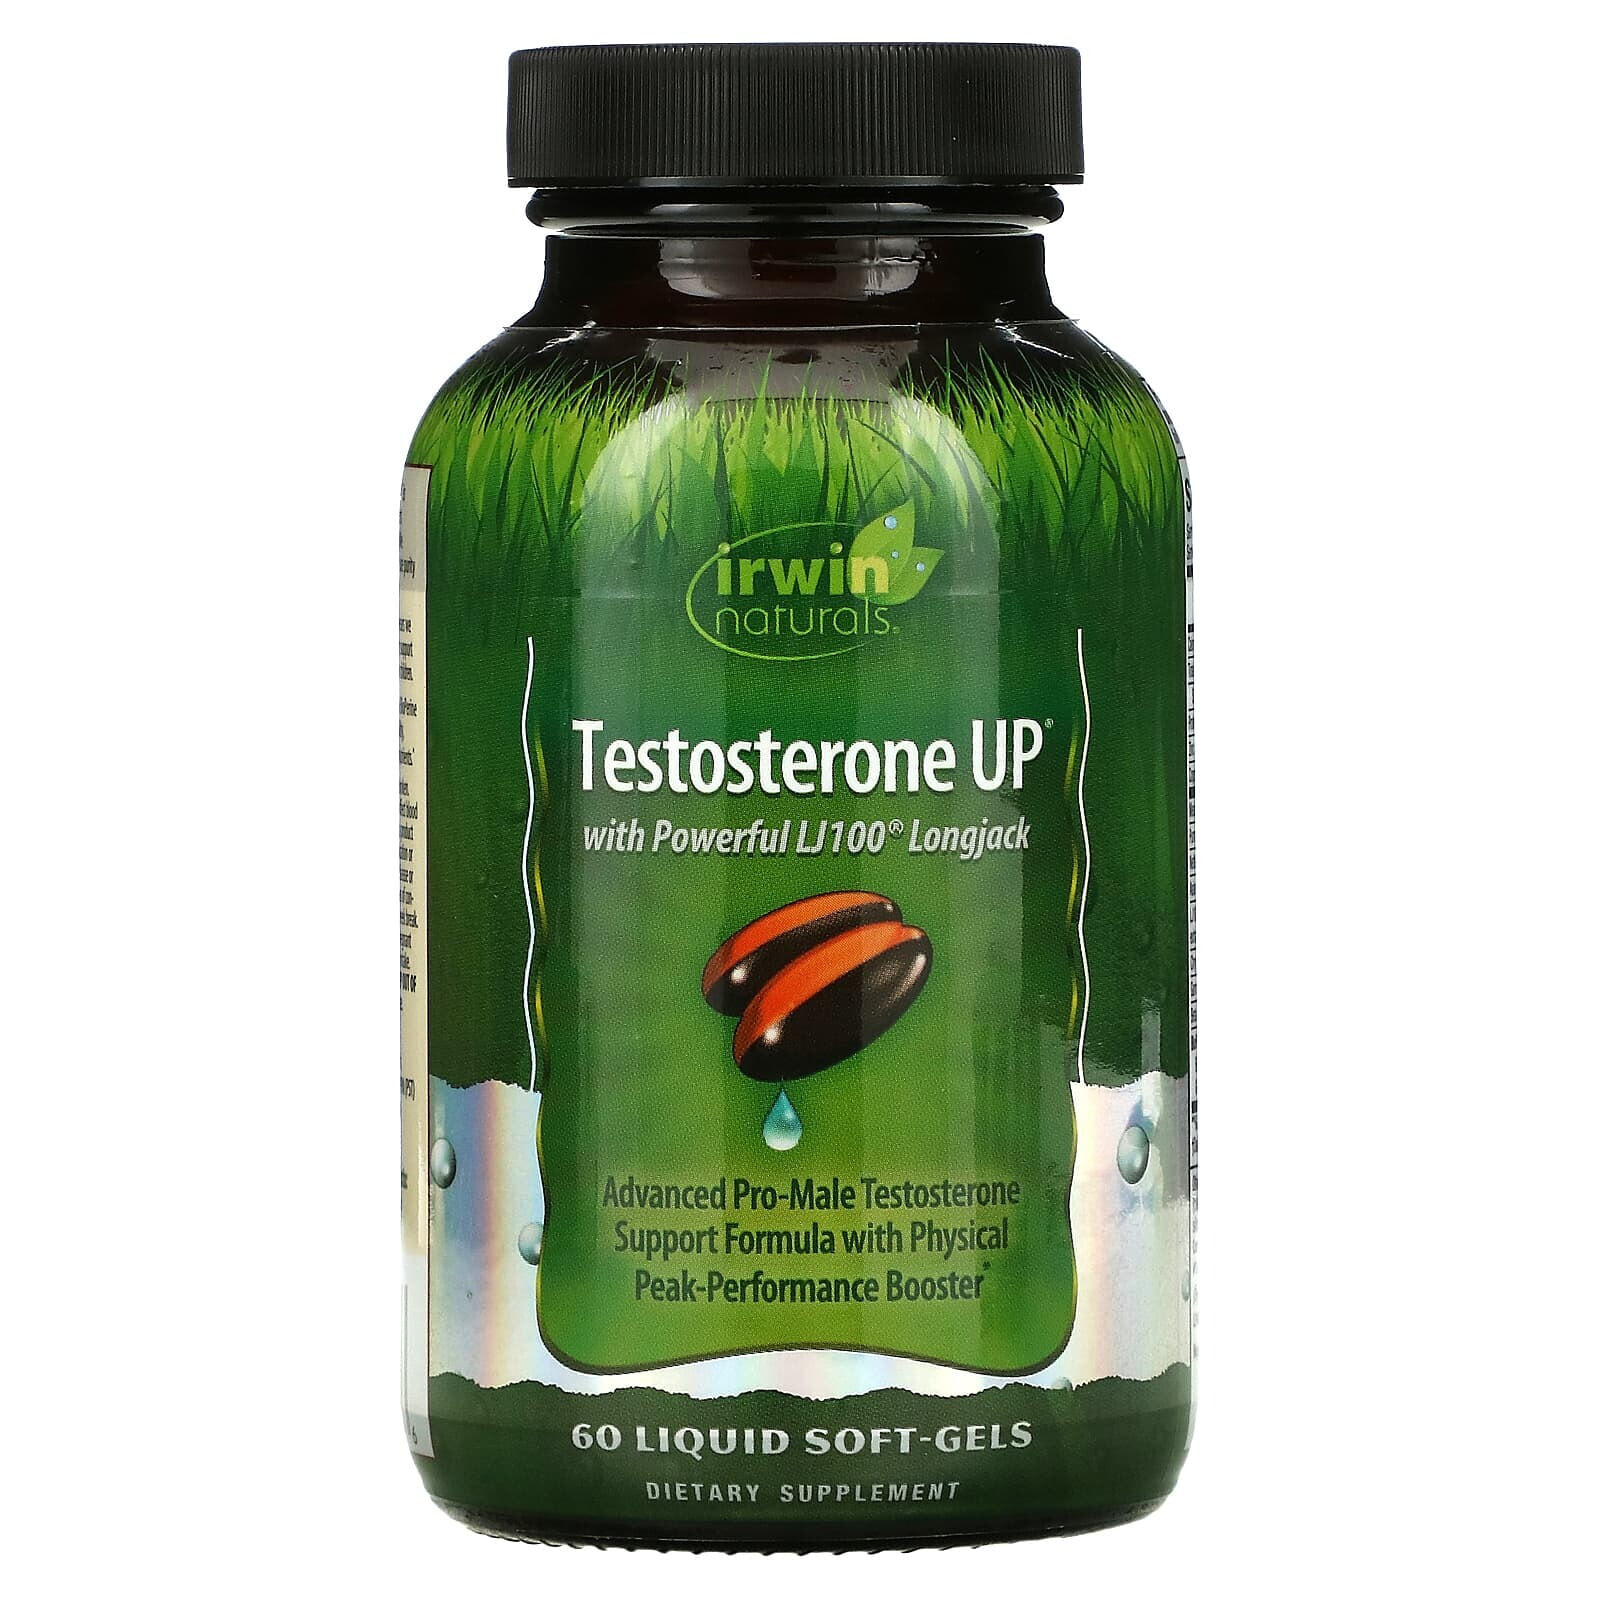 Testosterone UP, 120 Liquid Soft-Gels